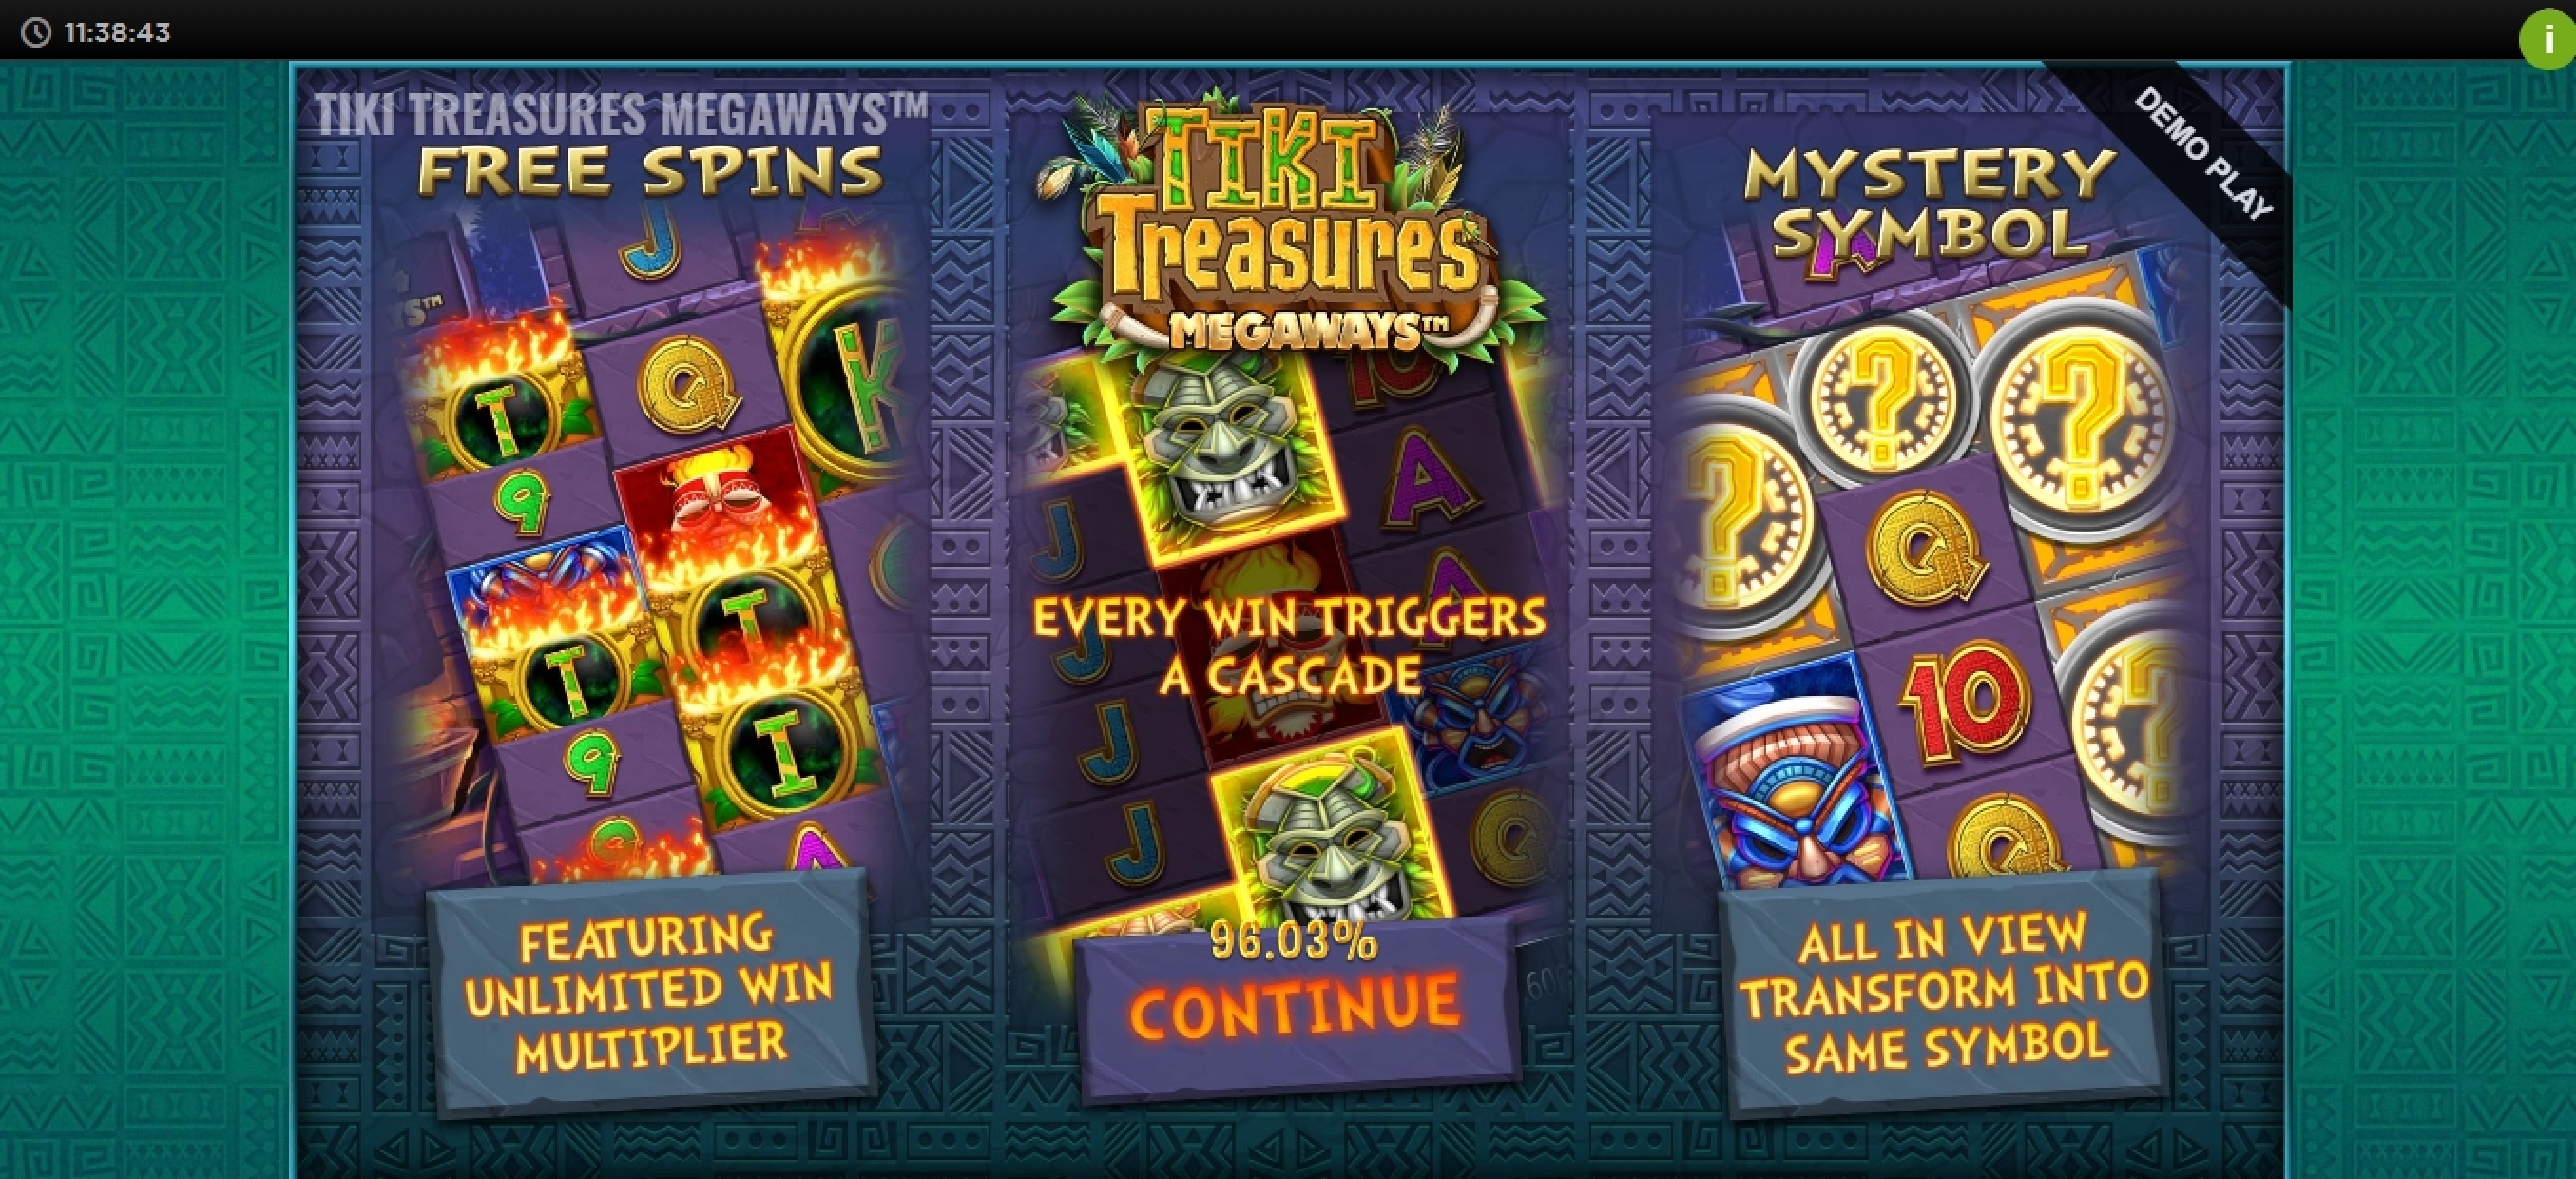 Play Tiki Treasures Megaways Free Casino Slot Game by Blueprint Gaming